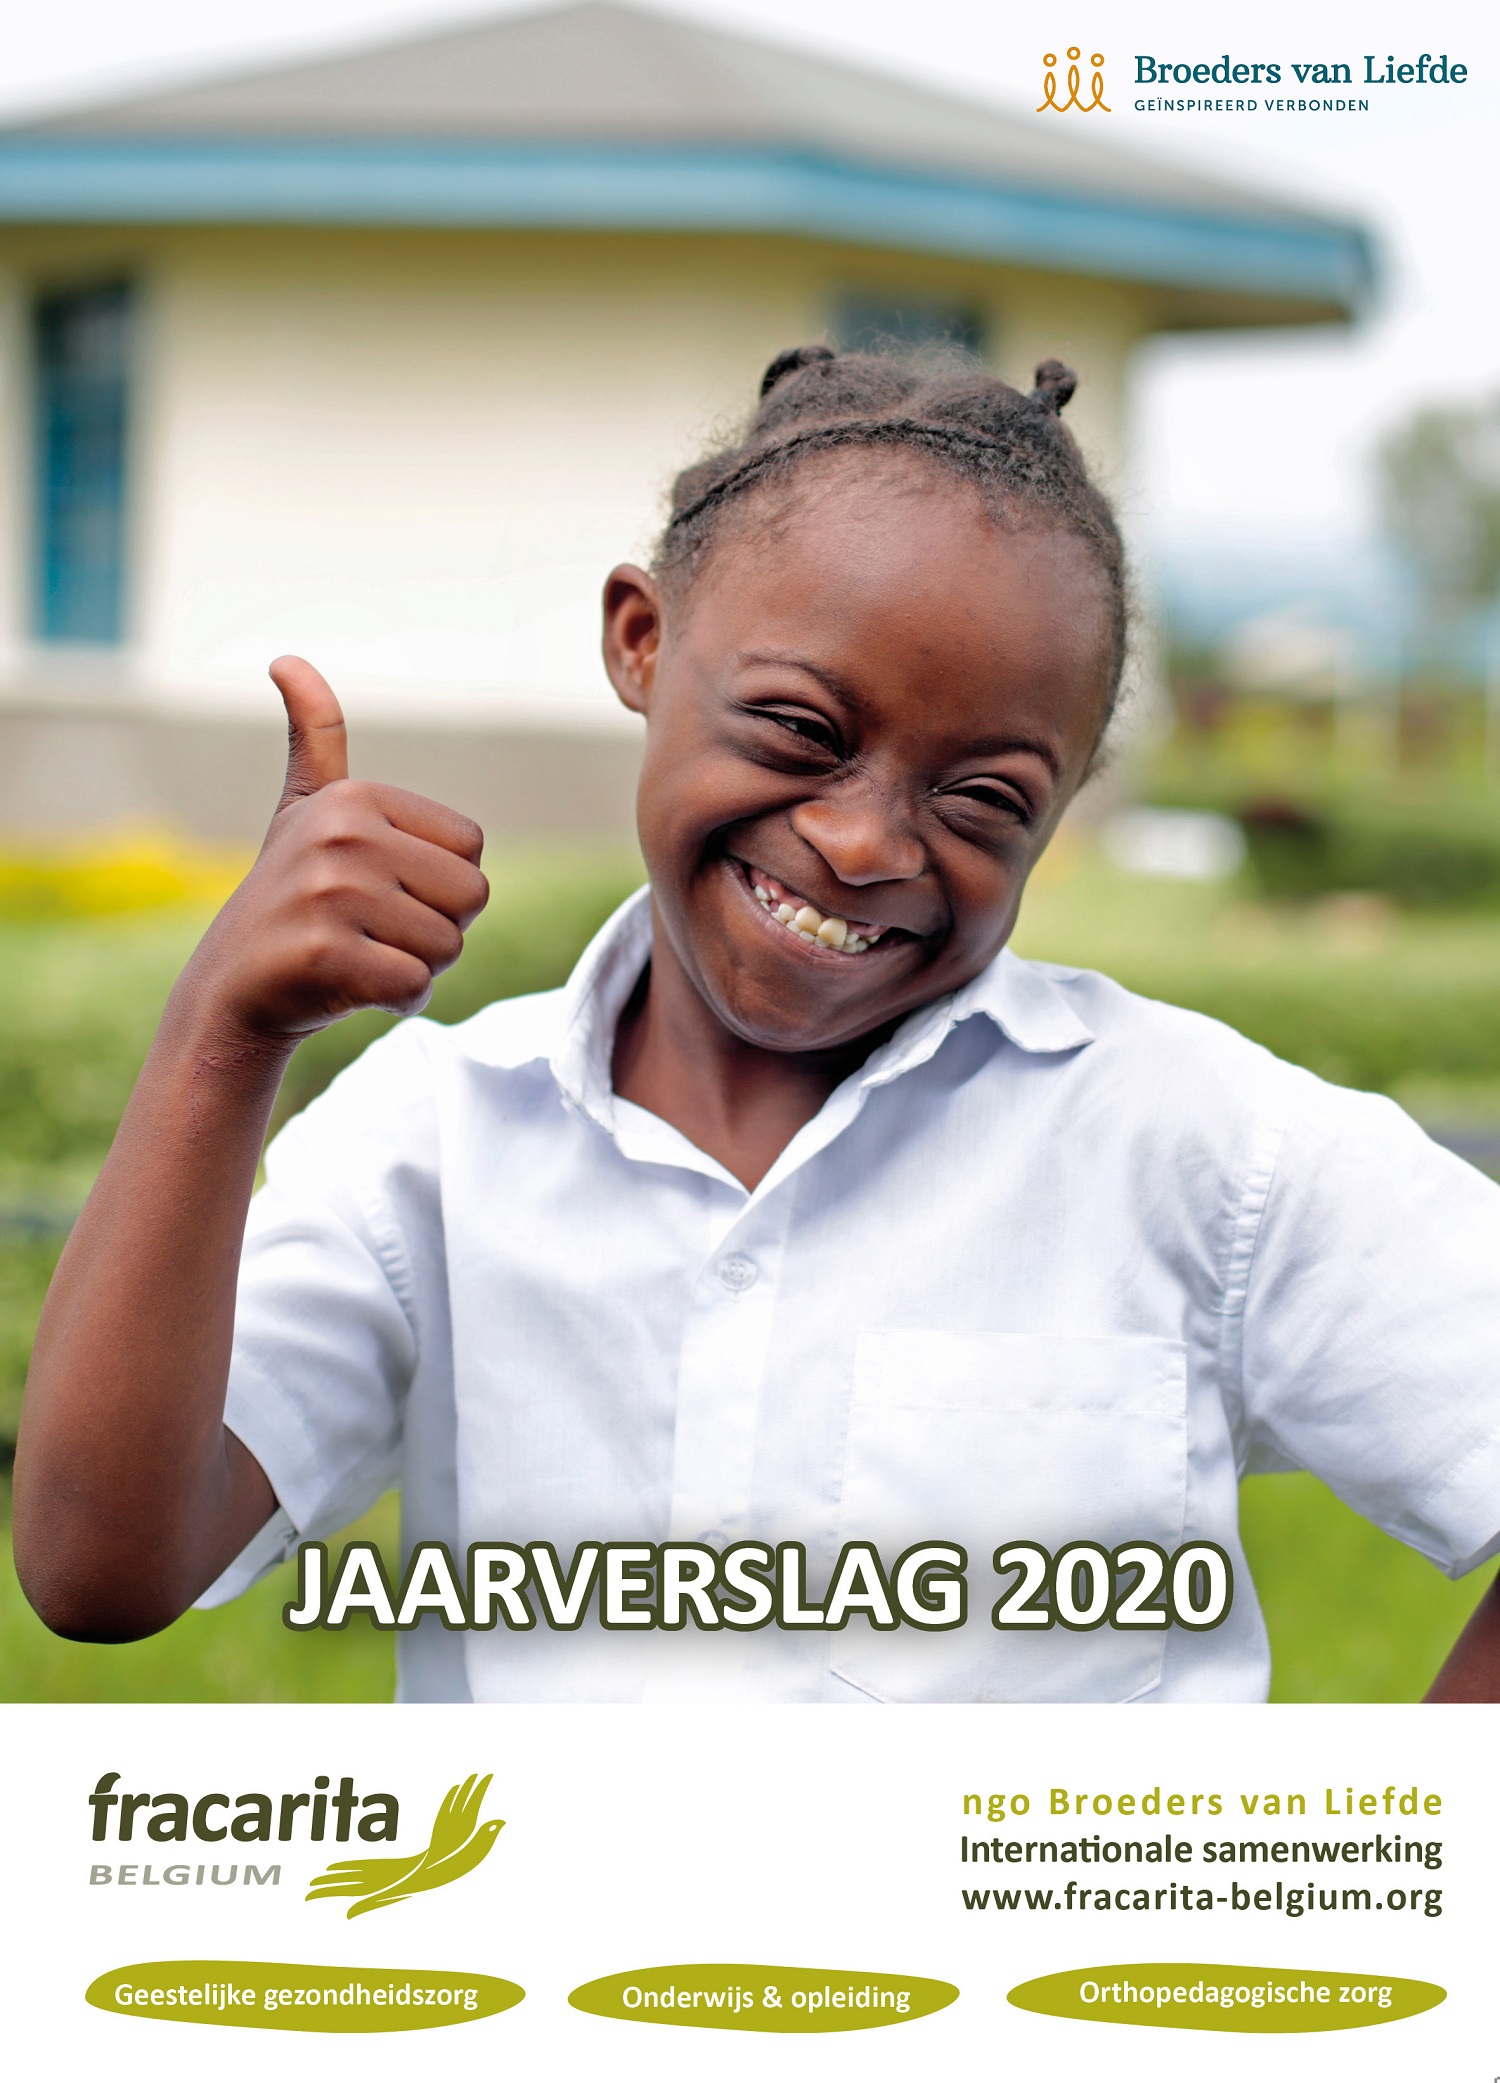 Cover Fracarita Belgium Jaarverslag 2020 - Broeders van Liefde